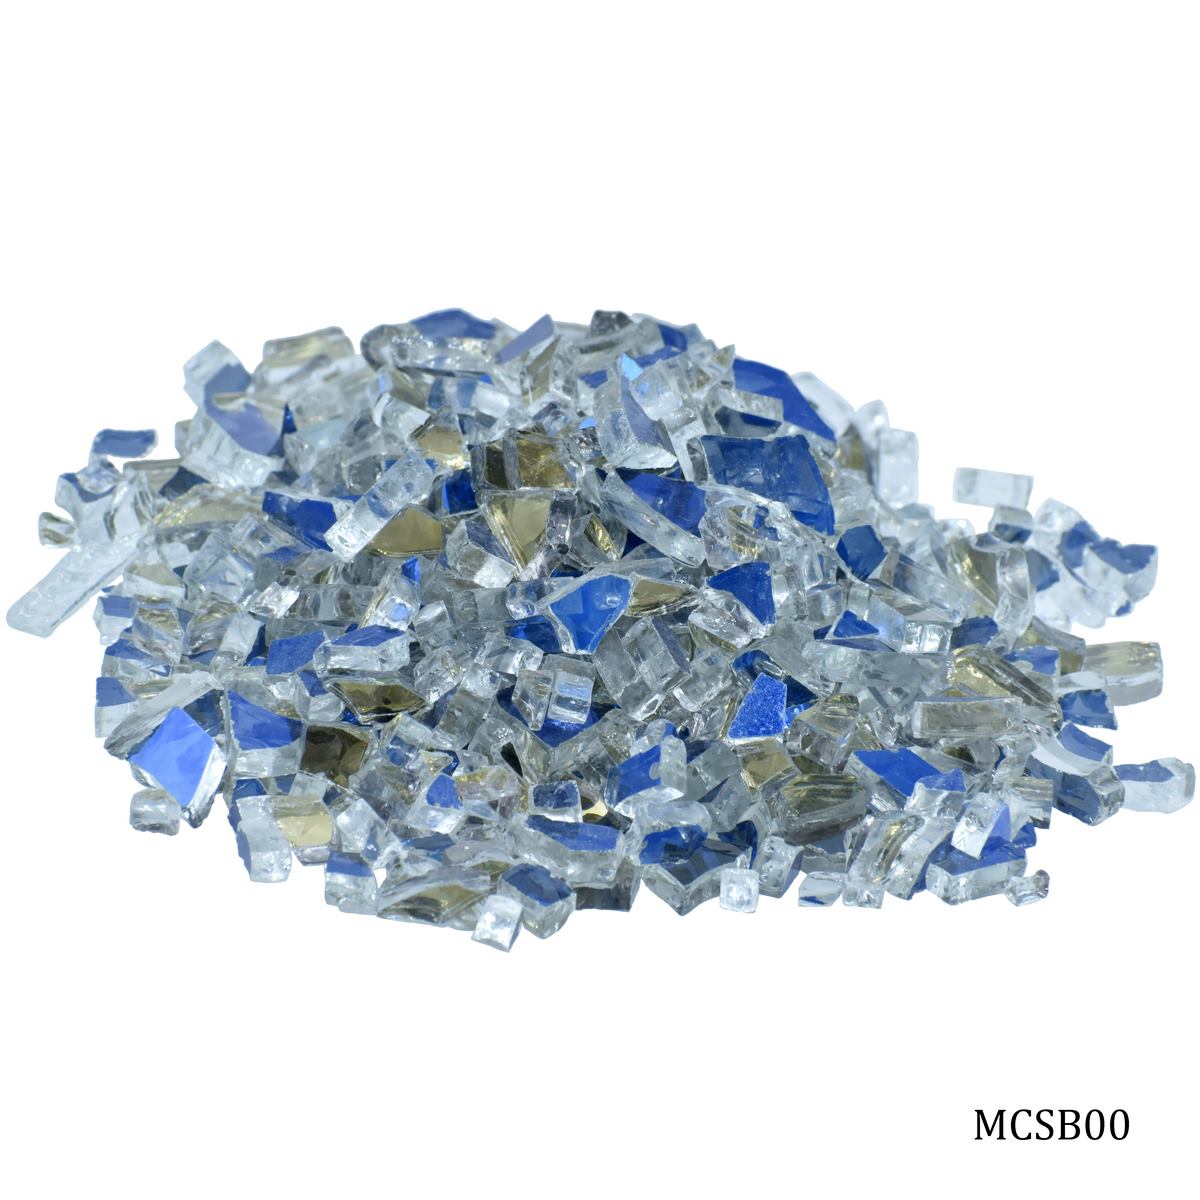 jags-mumbai Lippan Crushed Mirror Glass for resin & lippan art 200 grams  - Size 5-10 mm - Sapphire Blue Gold